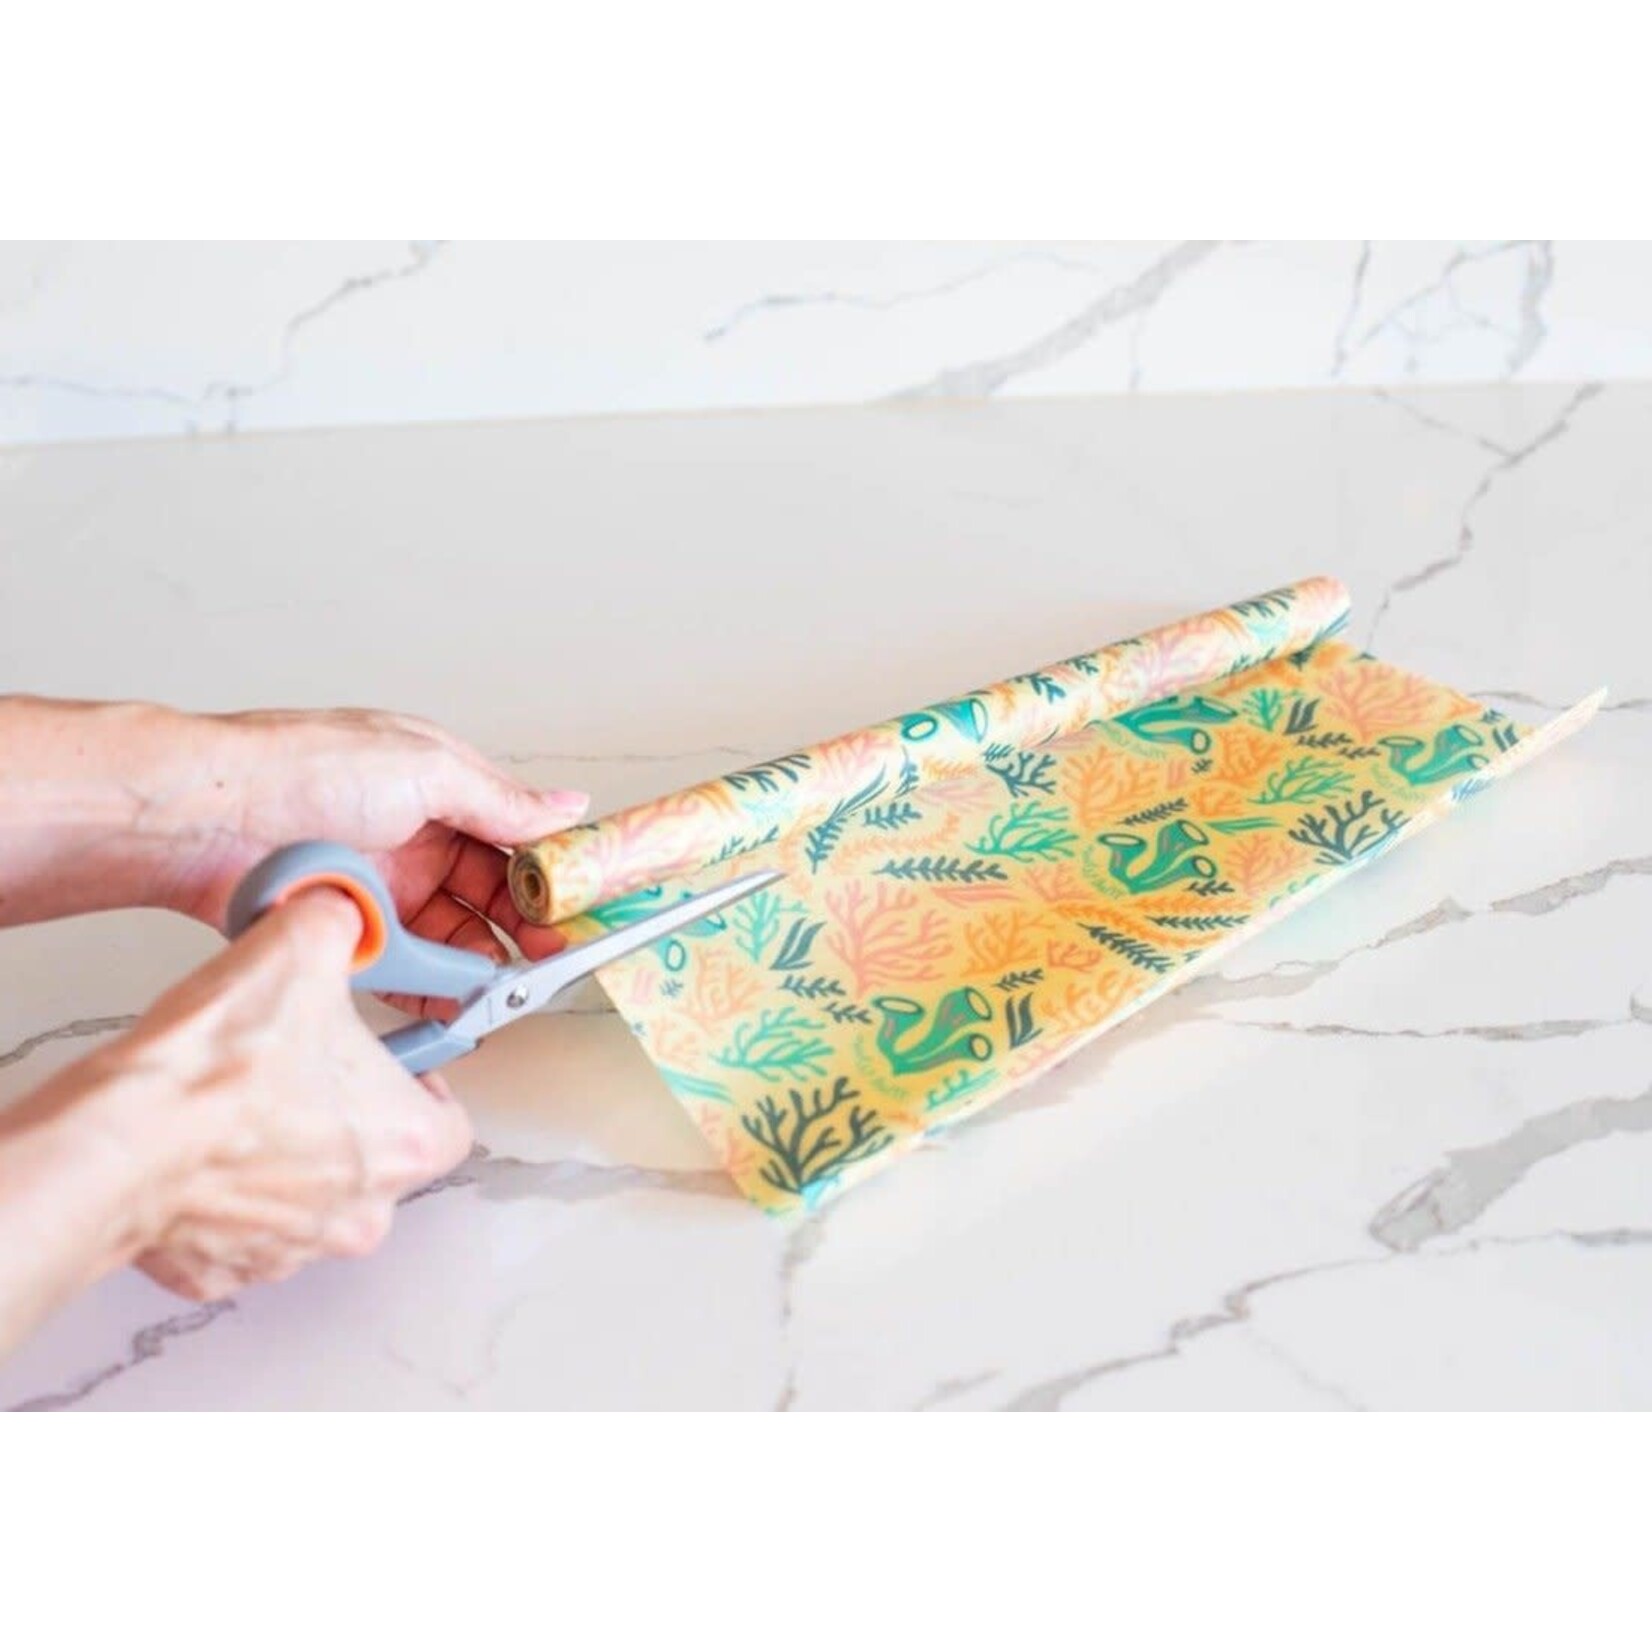 Meli Wraps Reusable Beeswax Food Wraps Bulk Roll